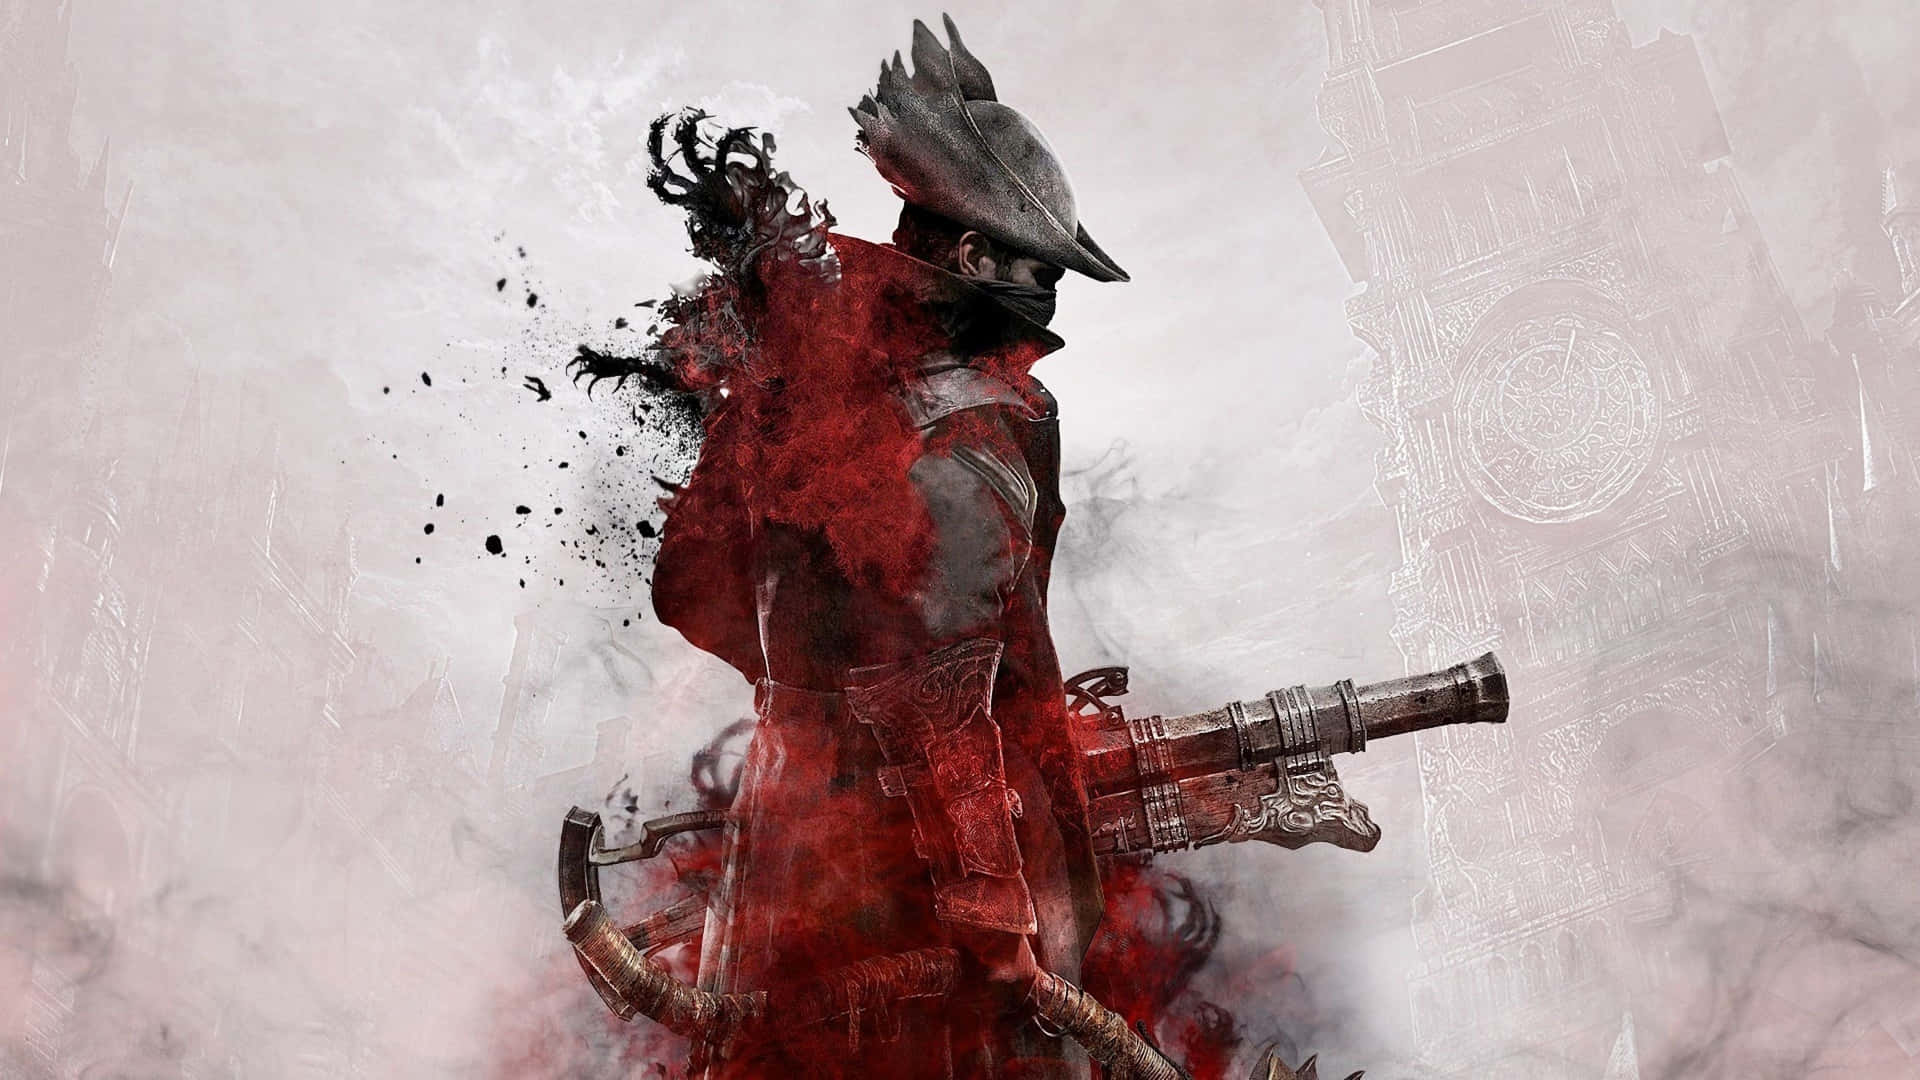 Bloodborne - PS4 on Vimeo